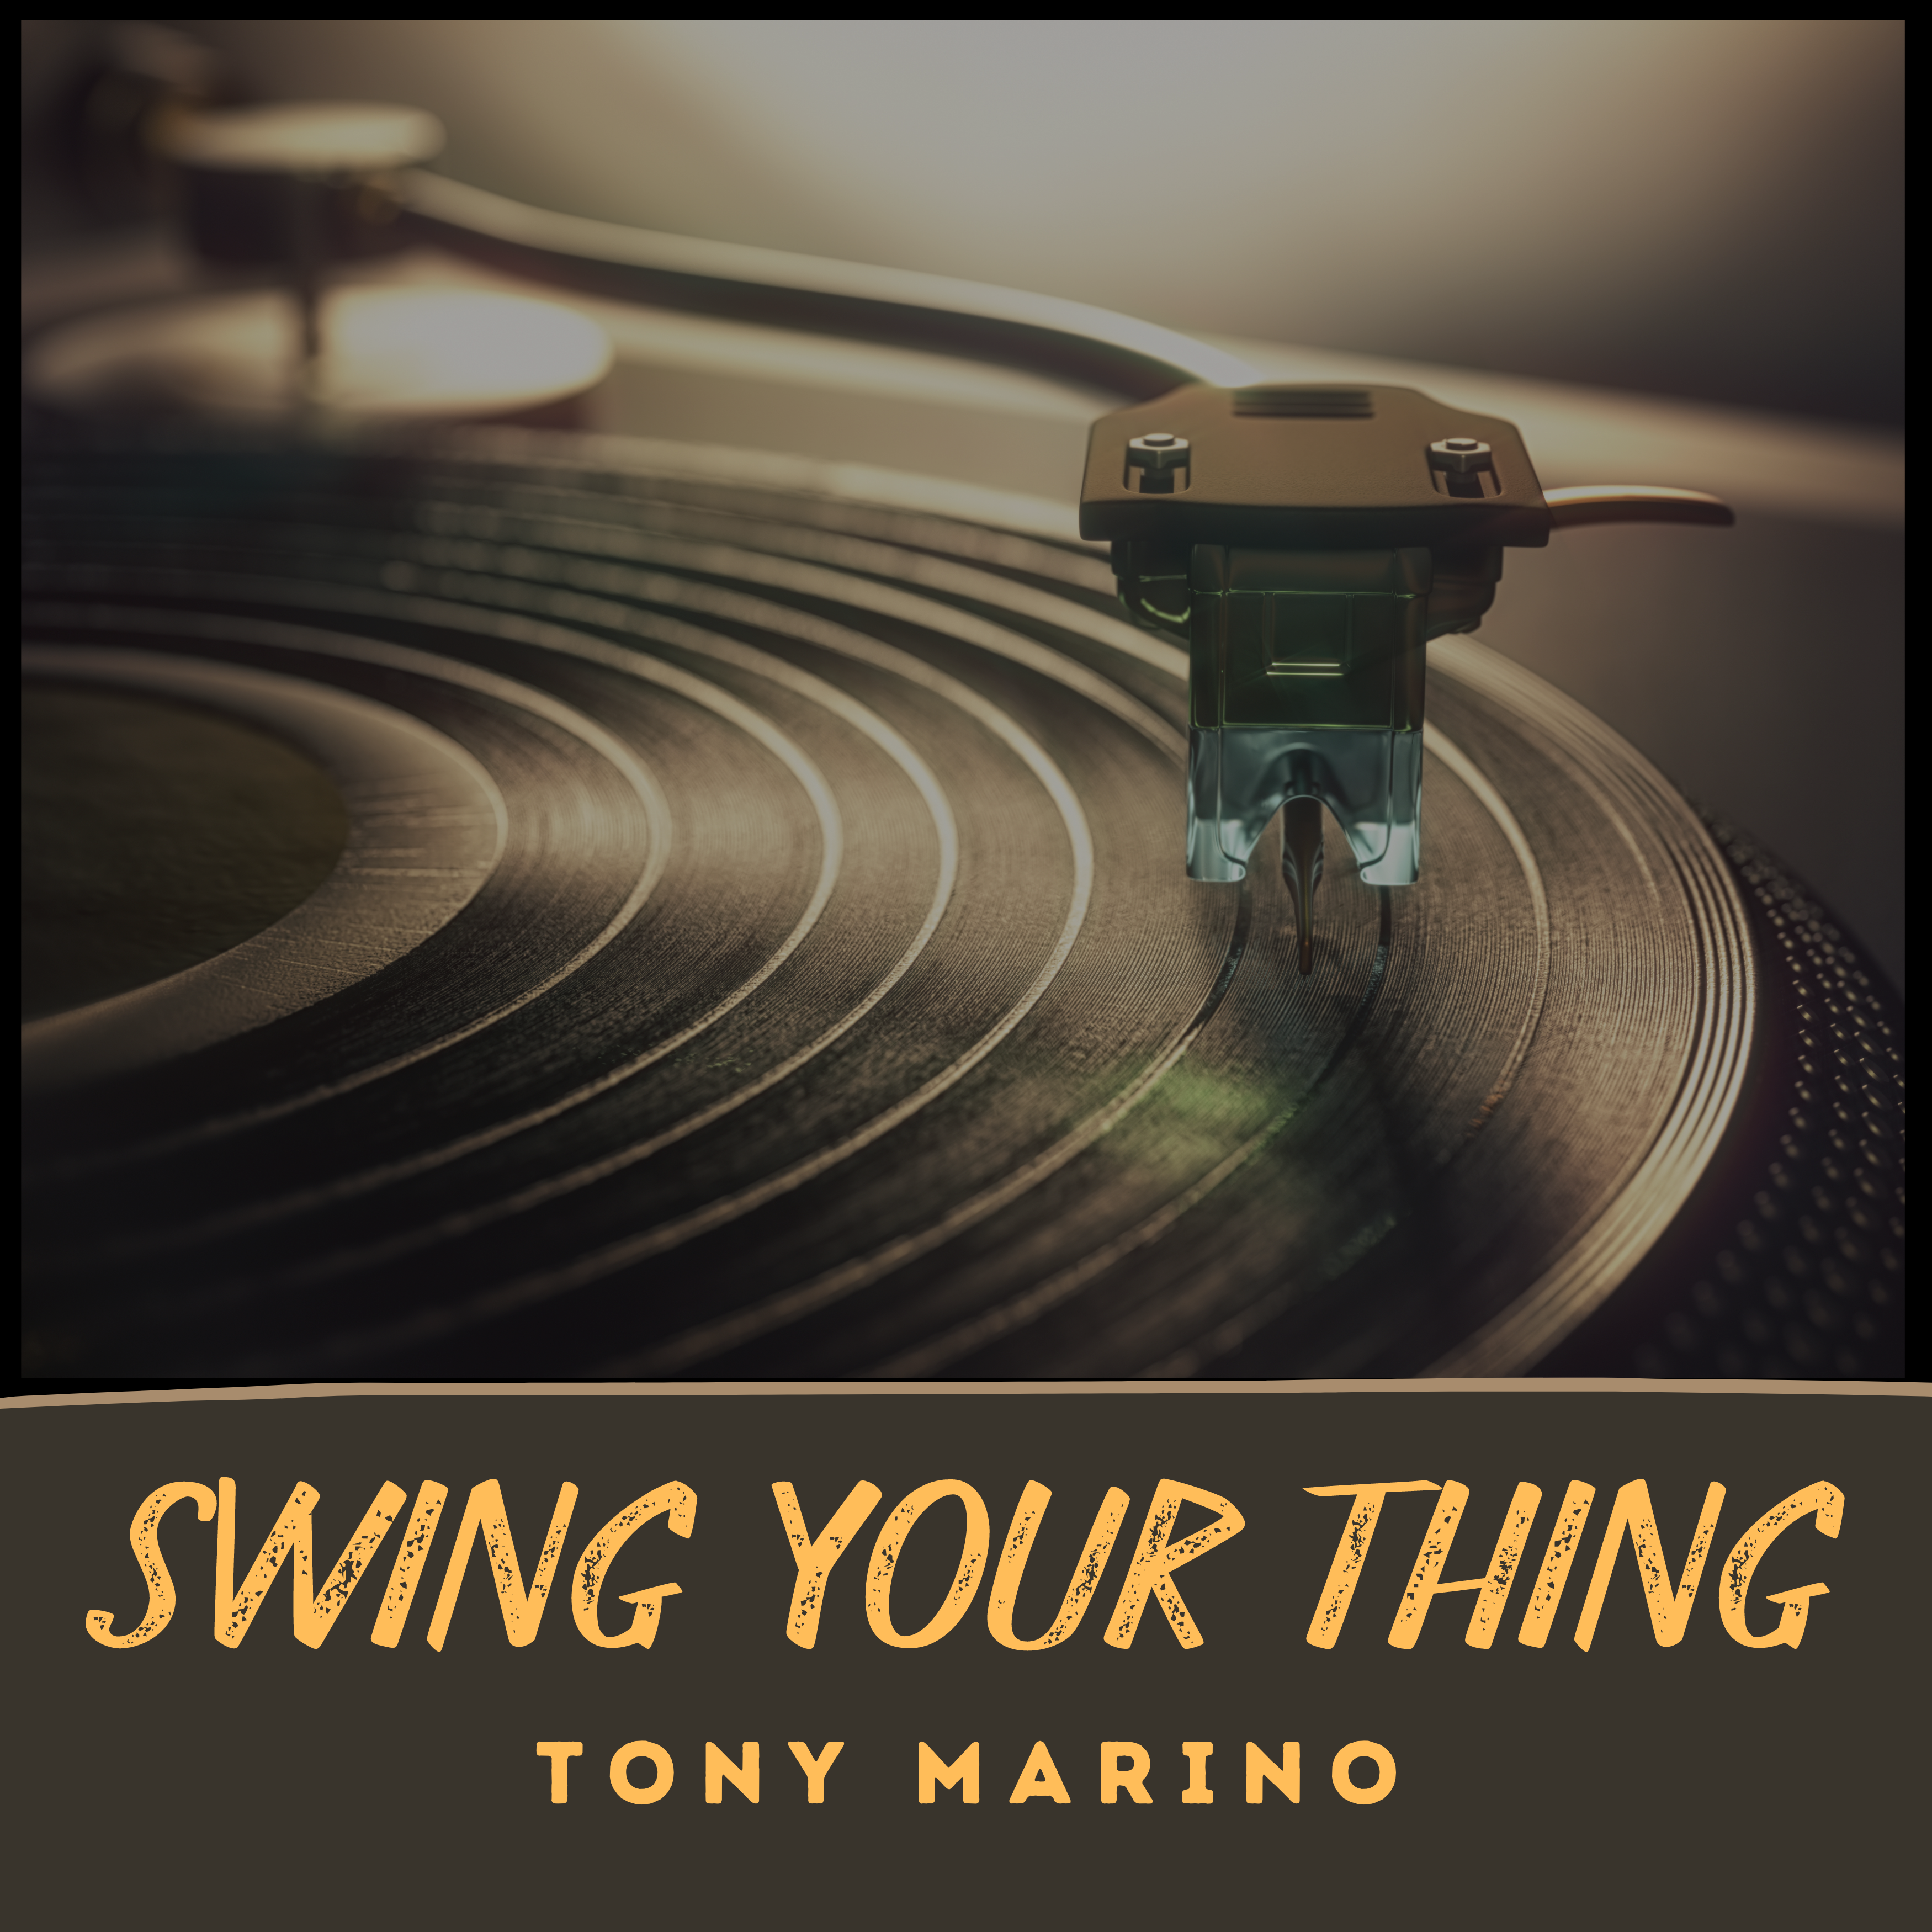 Tony Marino – Swing Your Thing (Album Review)